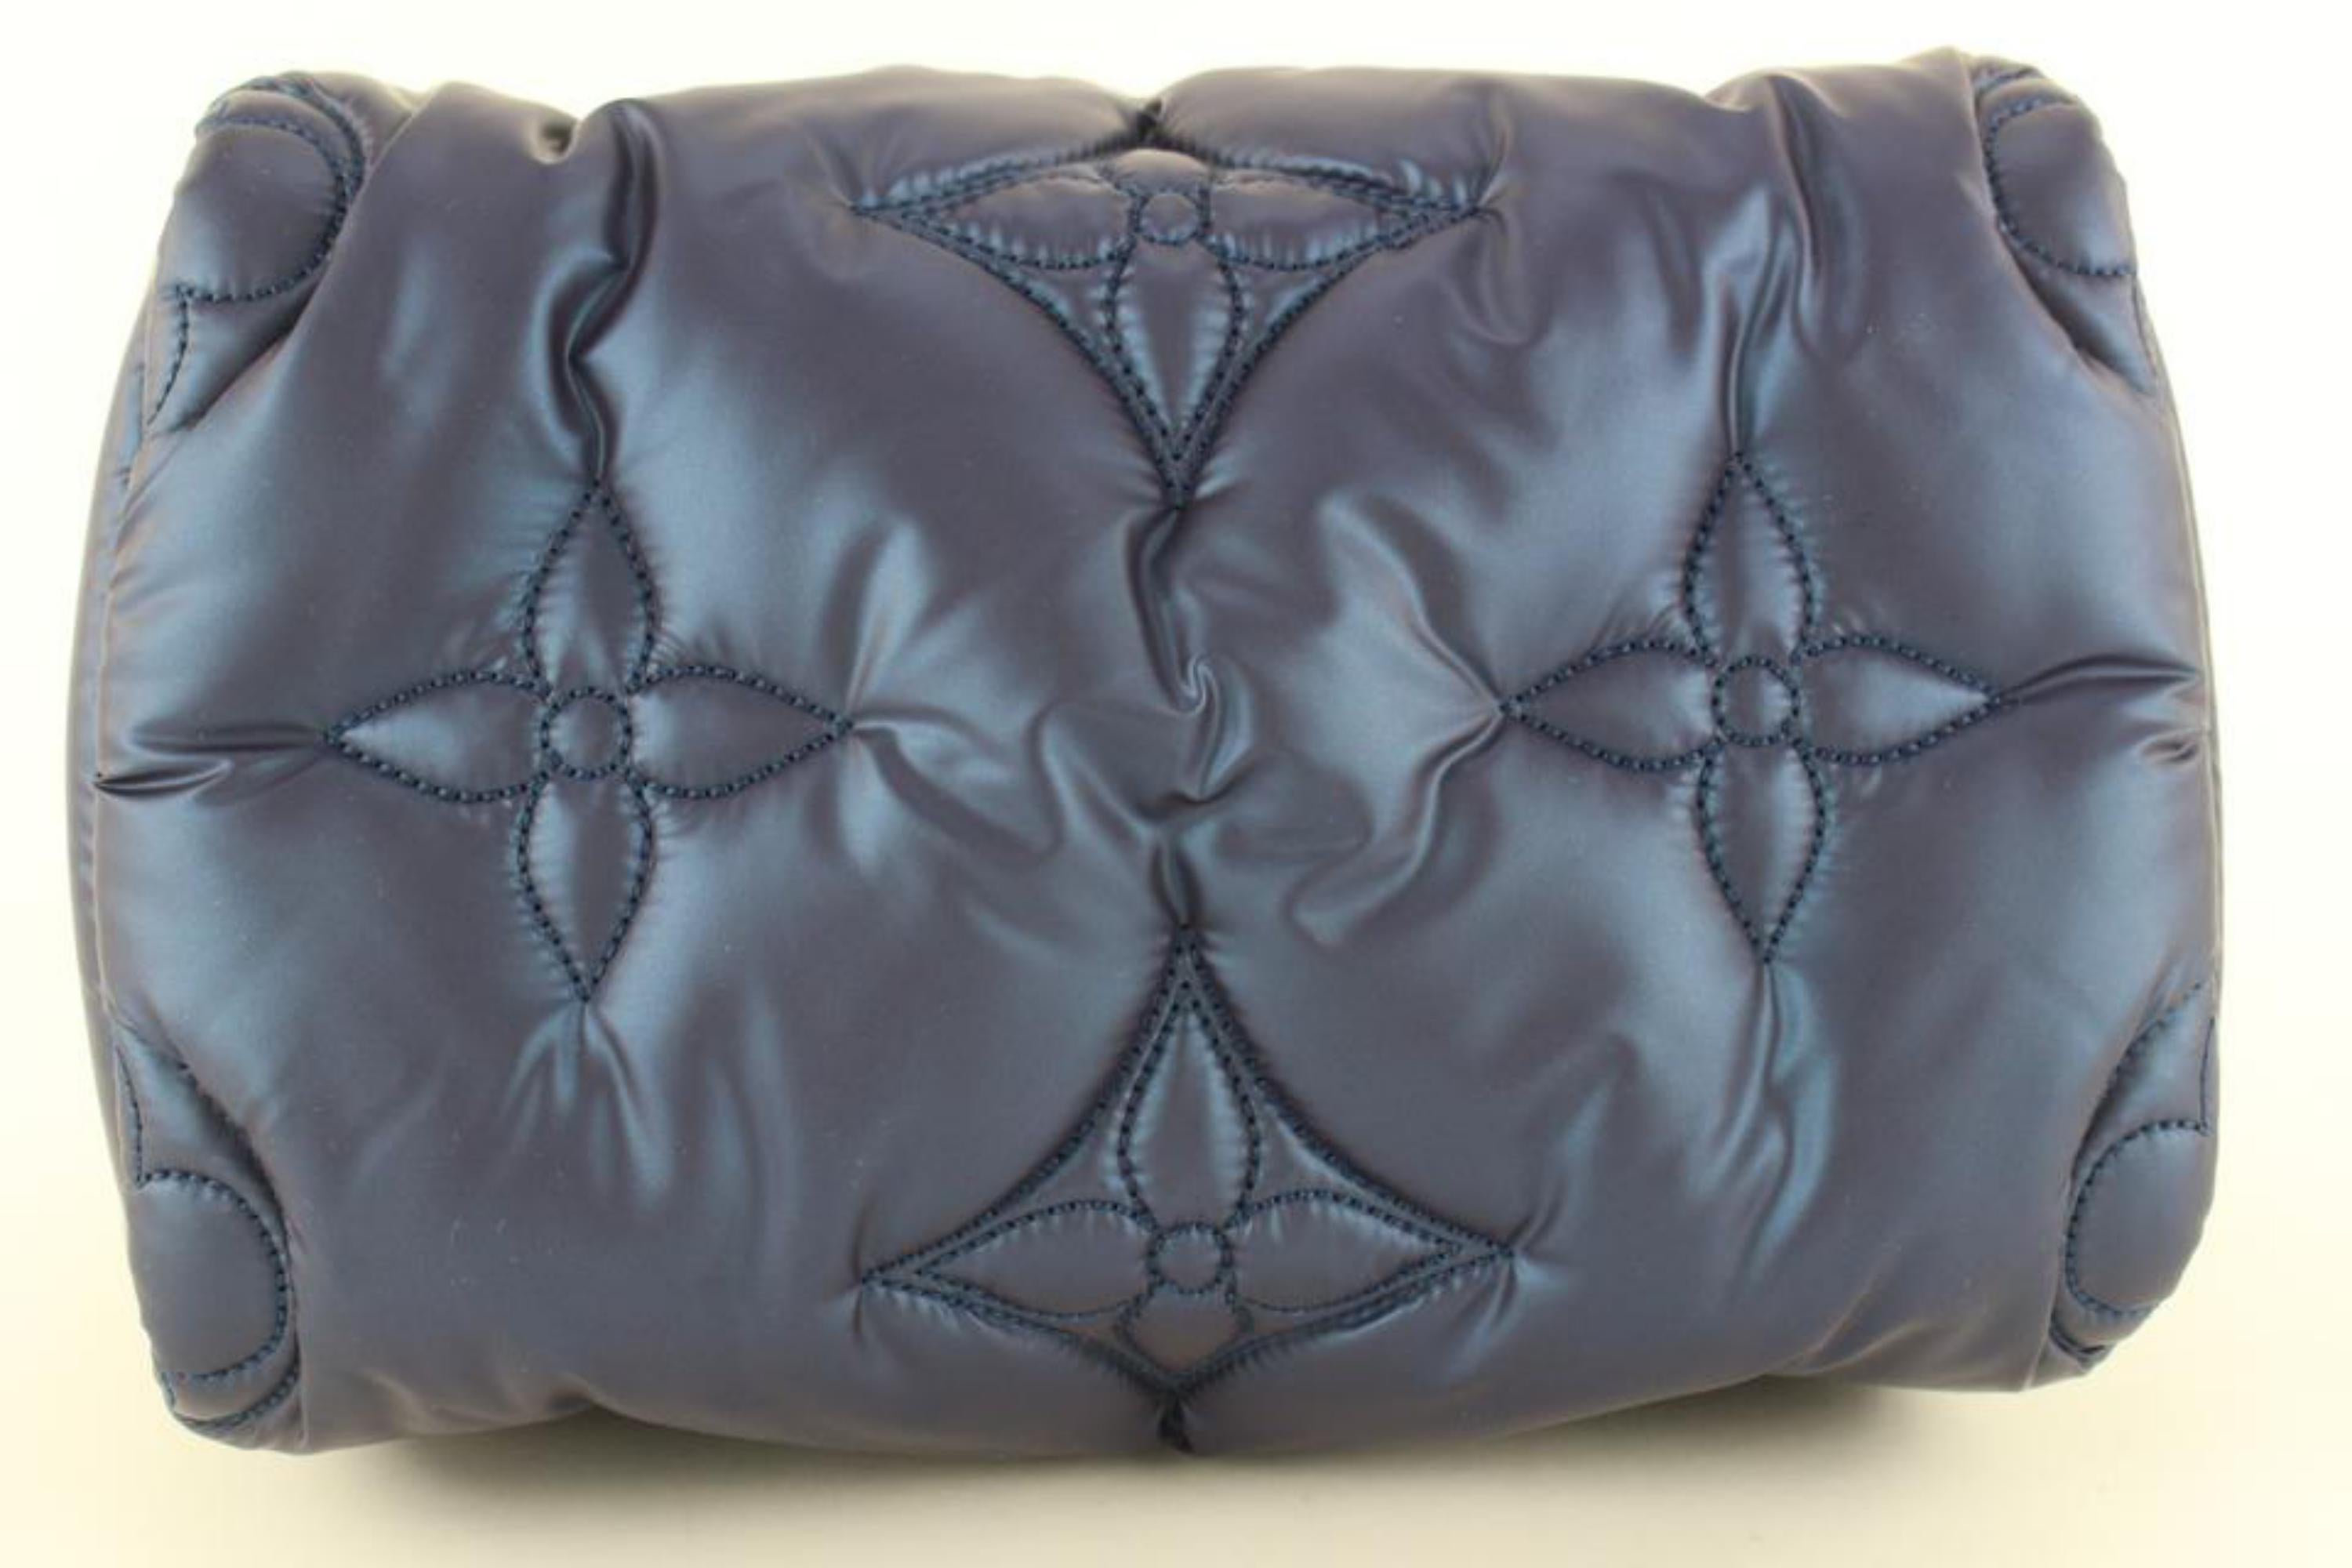 Louis Vuitton Speedy Pillow Bag - 2 For Sale on 1stDibs